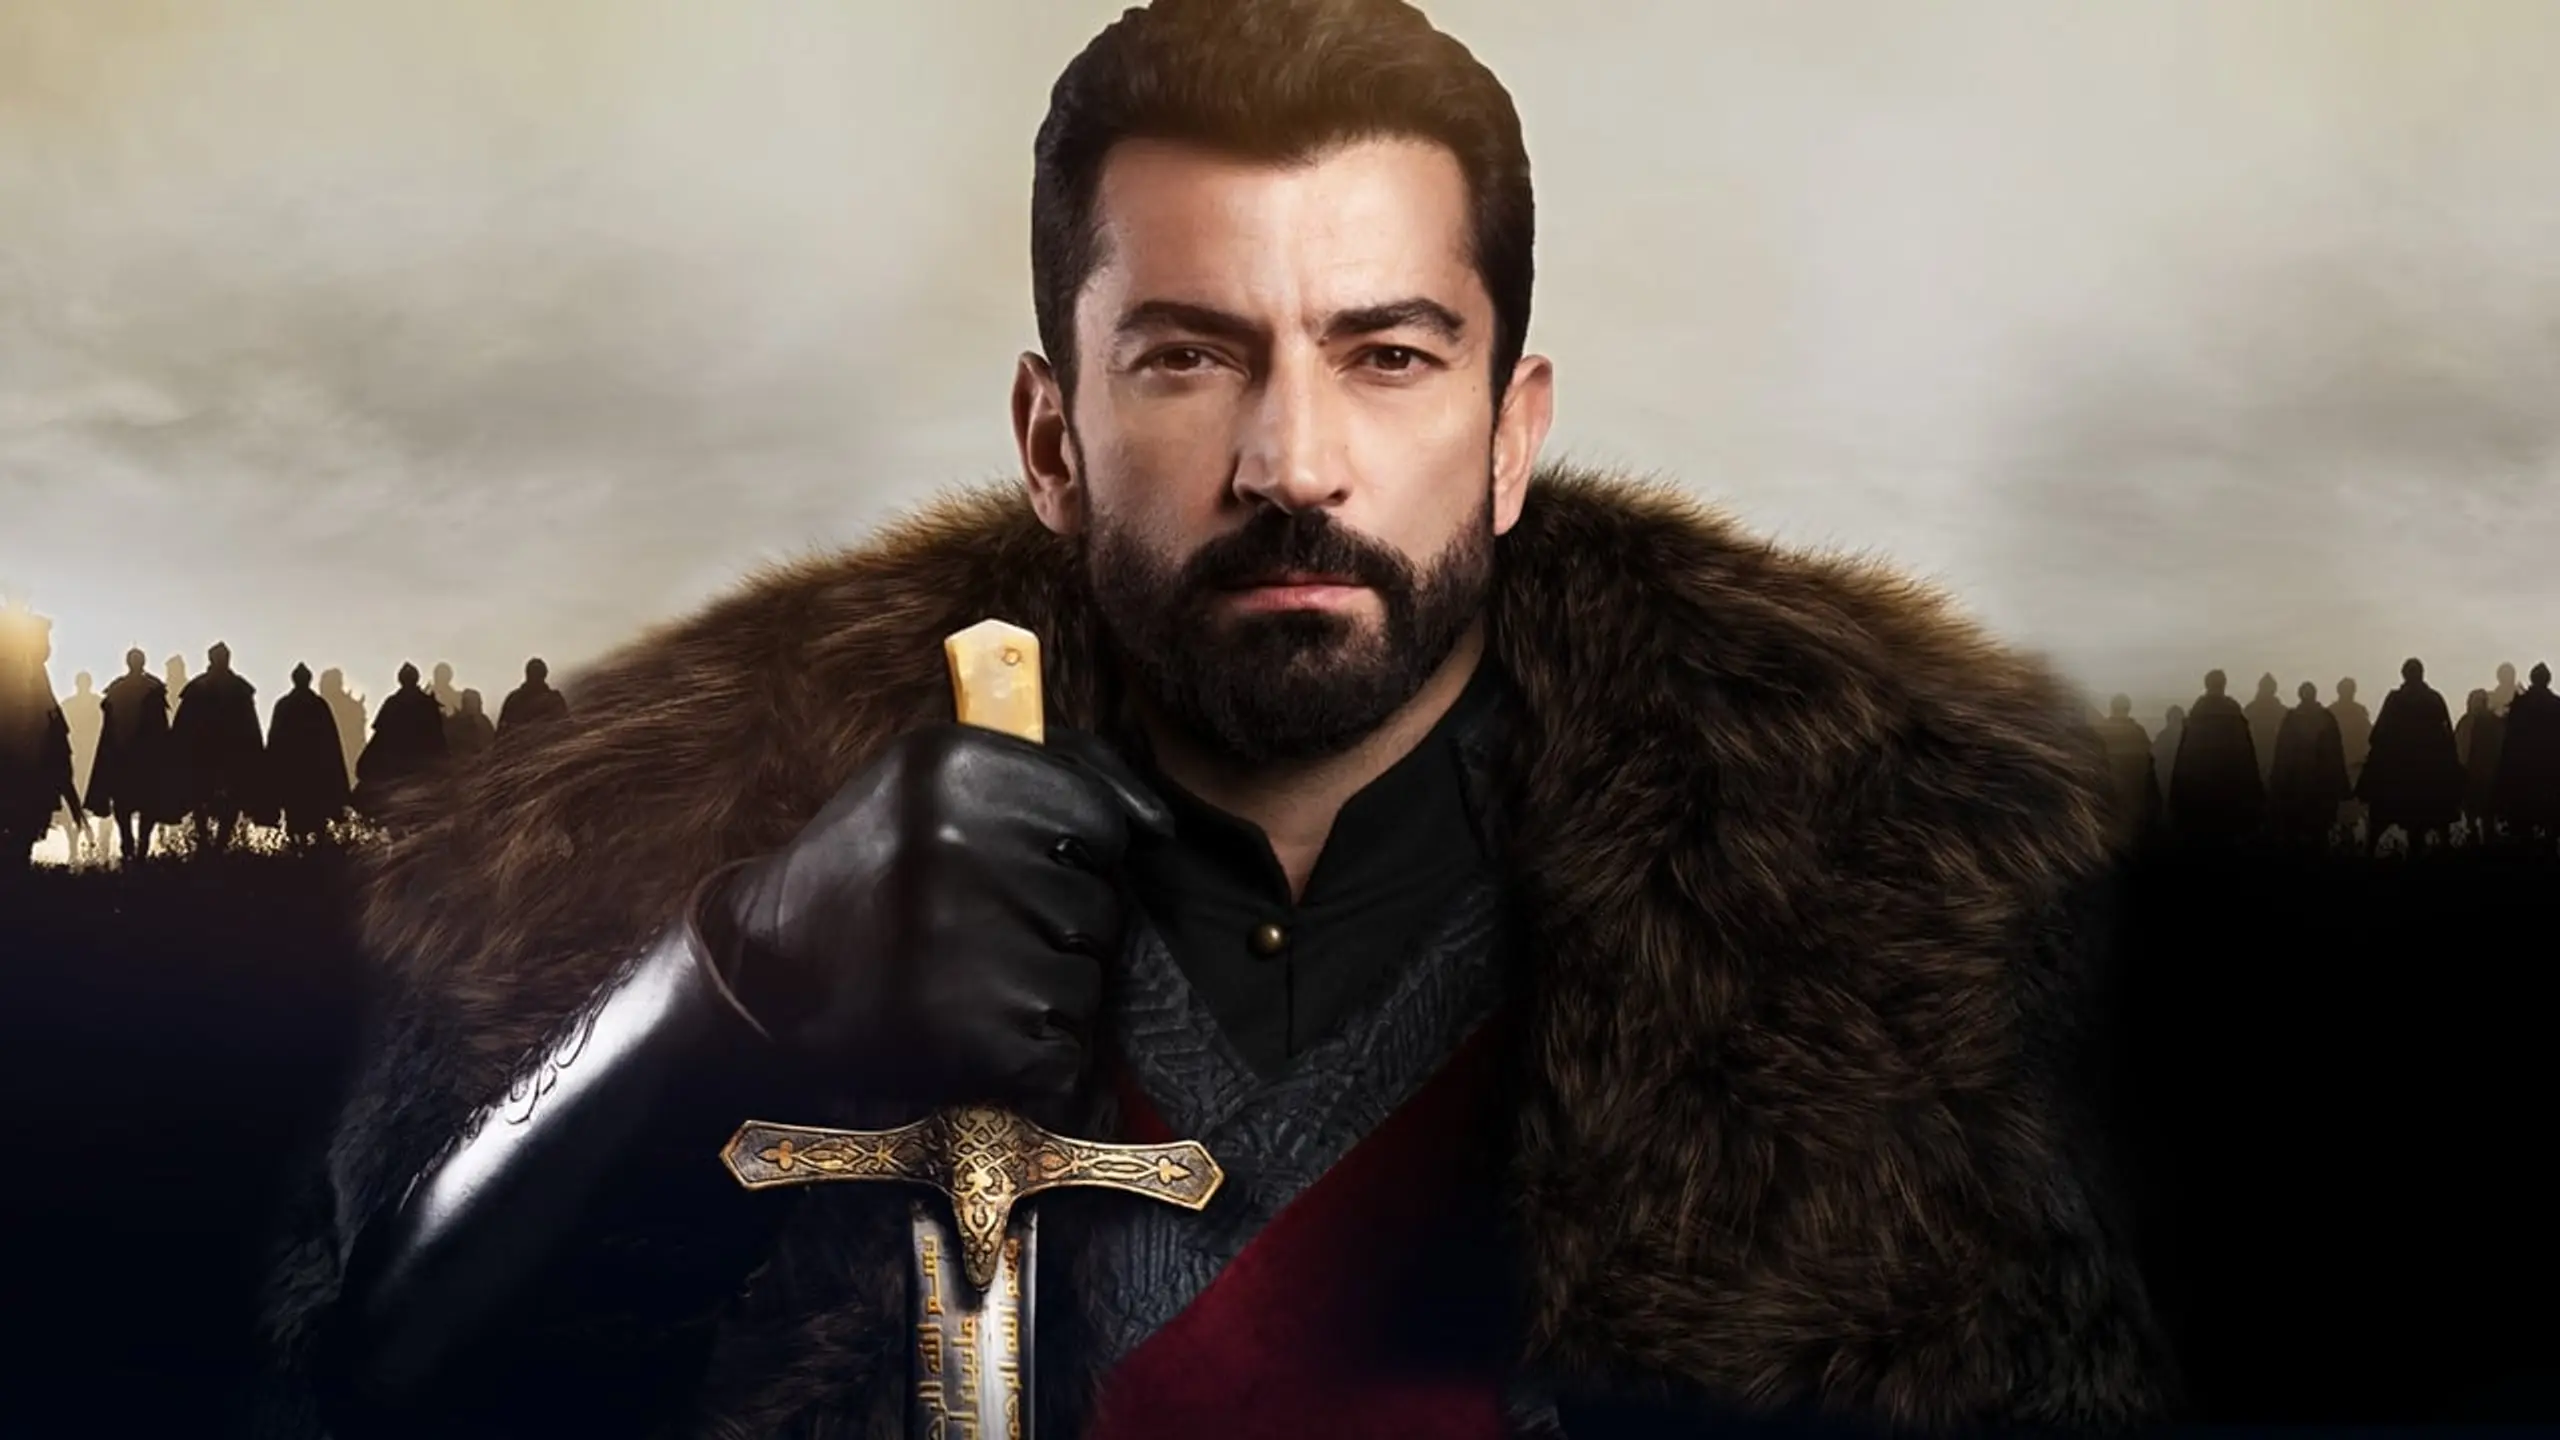 Mehmed: Bir Cihan Fatihi